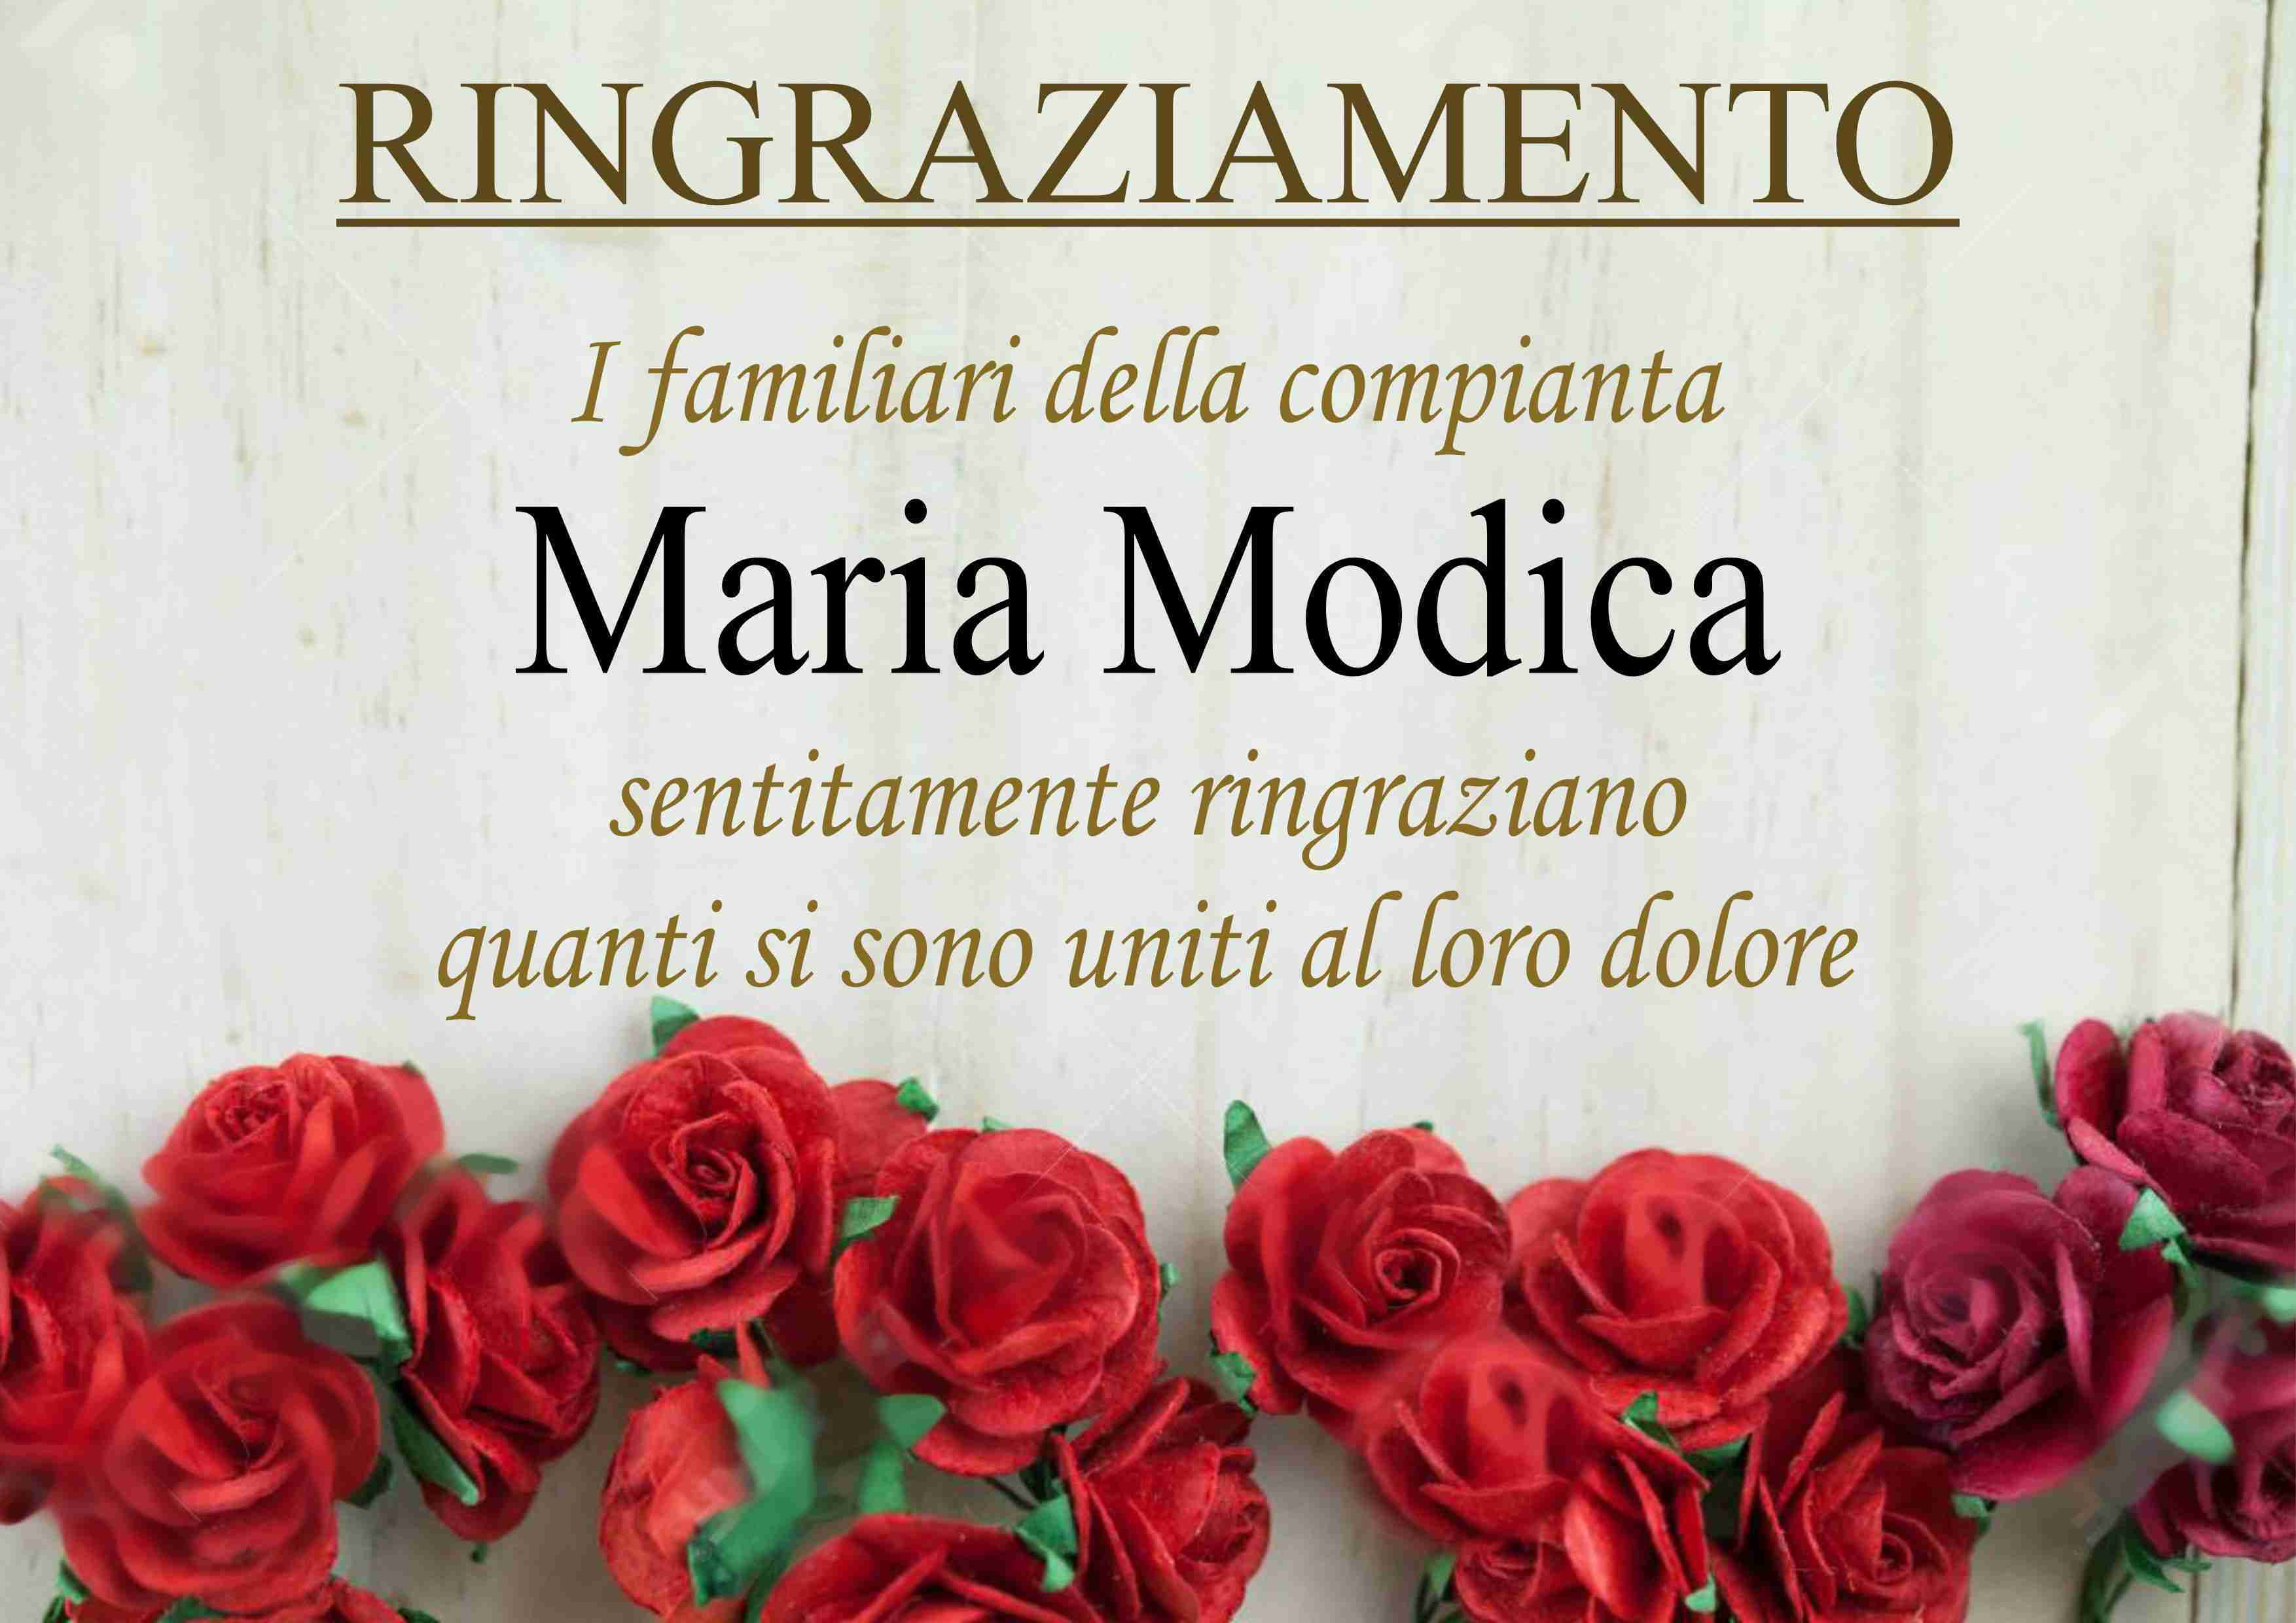 Maria Modica